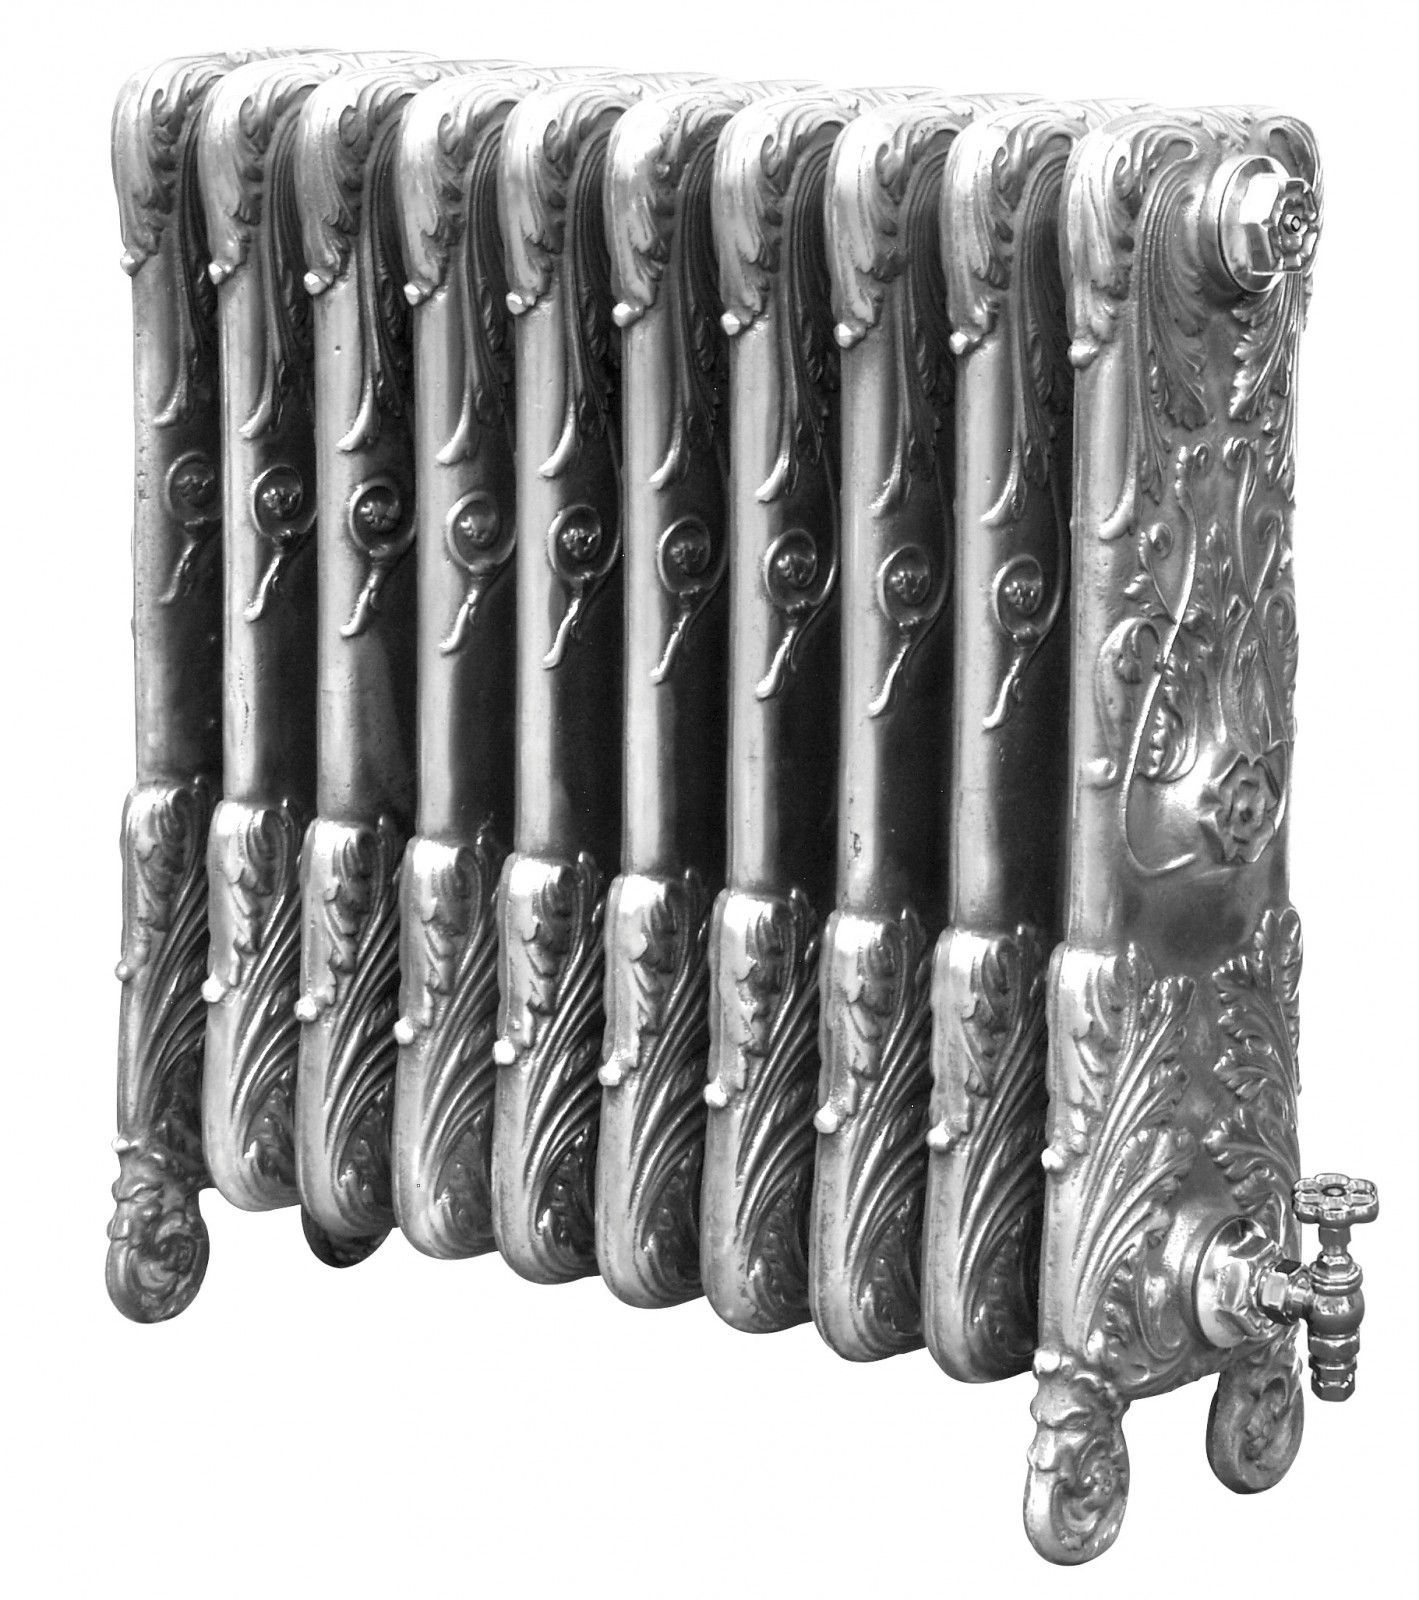 Carron cast iron radiators